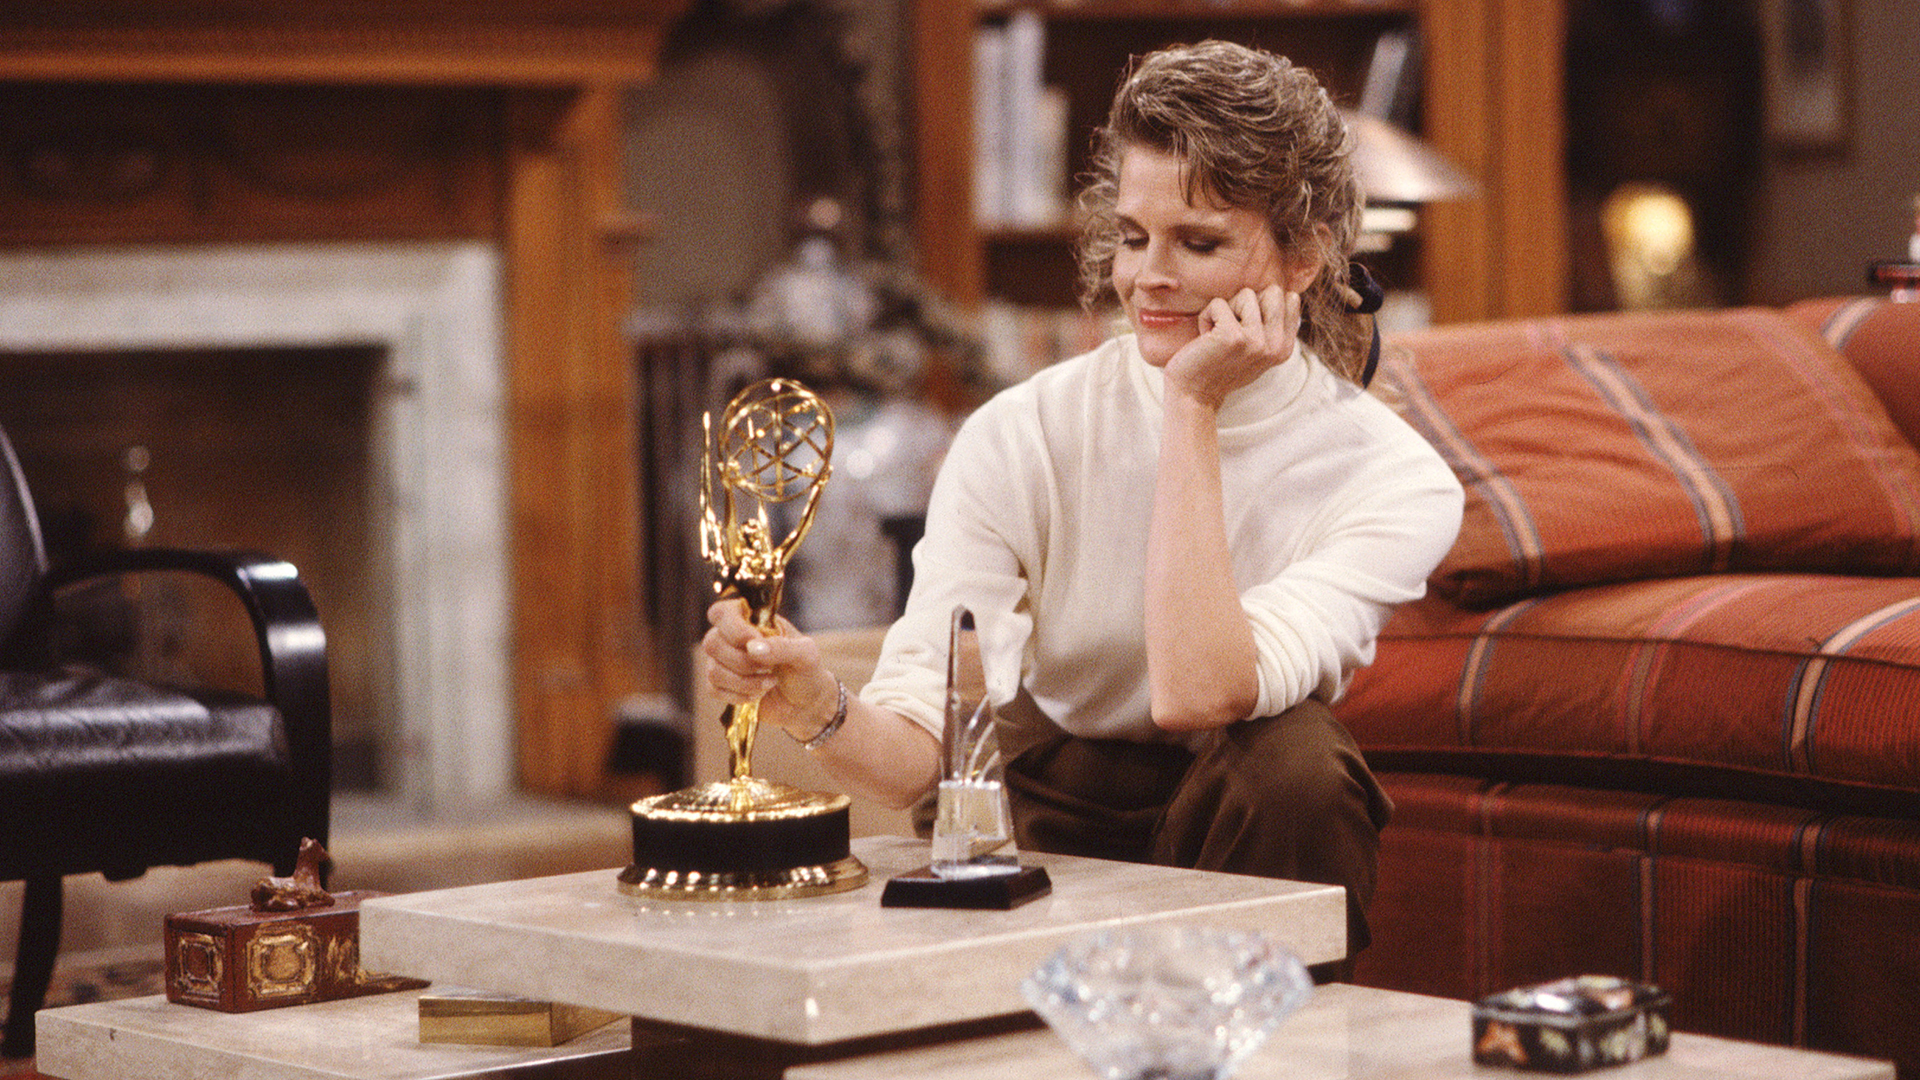 September 10, 1995: Candice Bergen Won Her Fifth Emmy Award For “Murphy Brown”